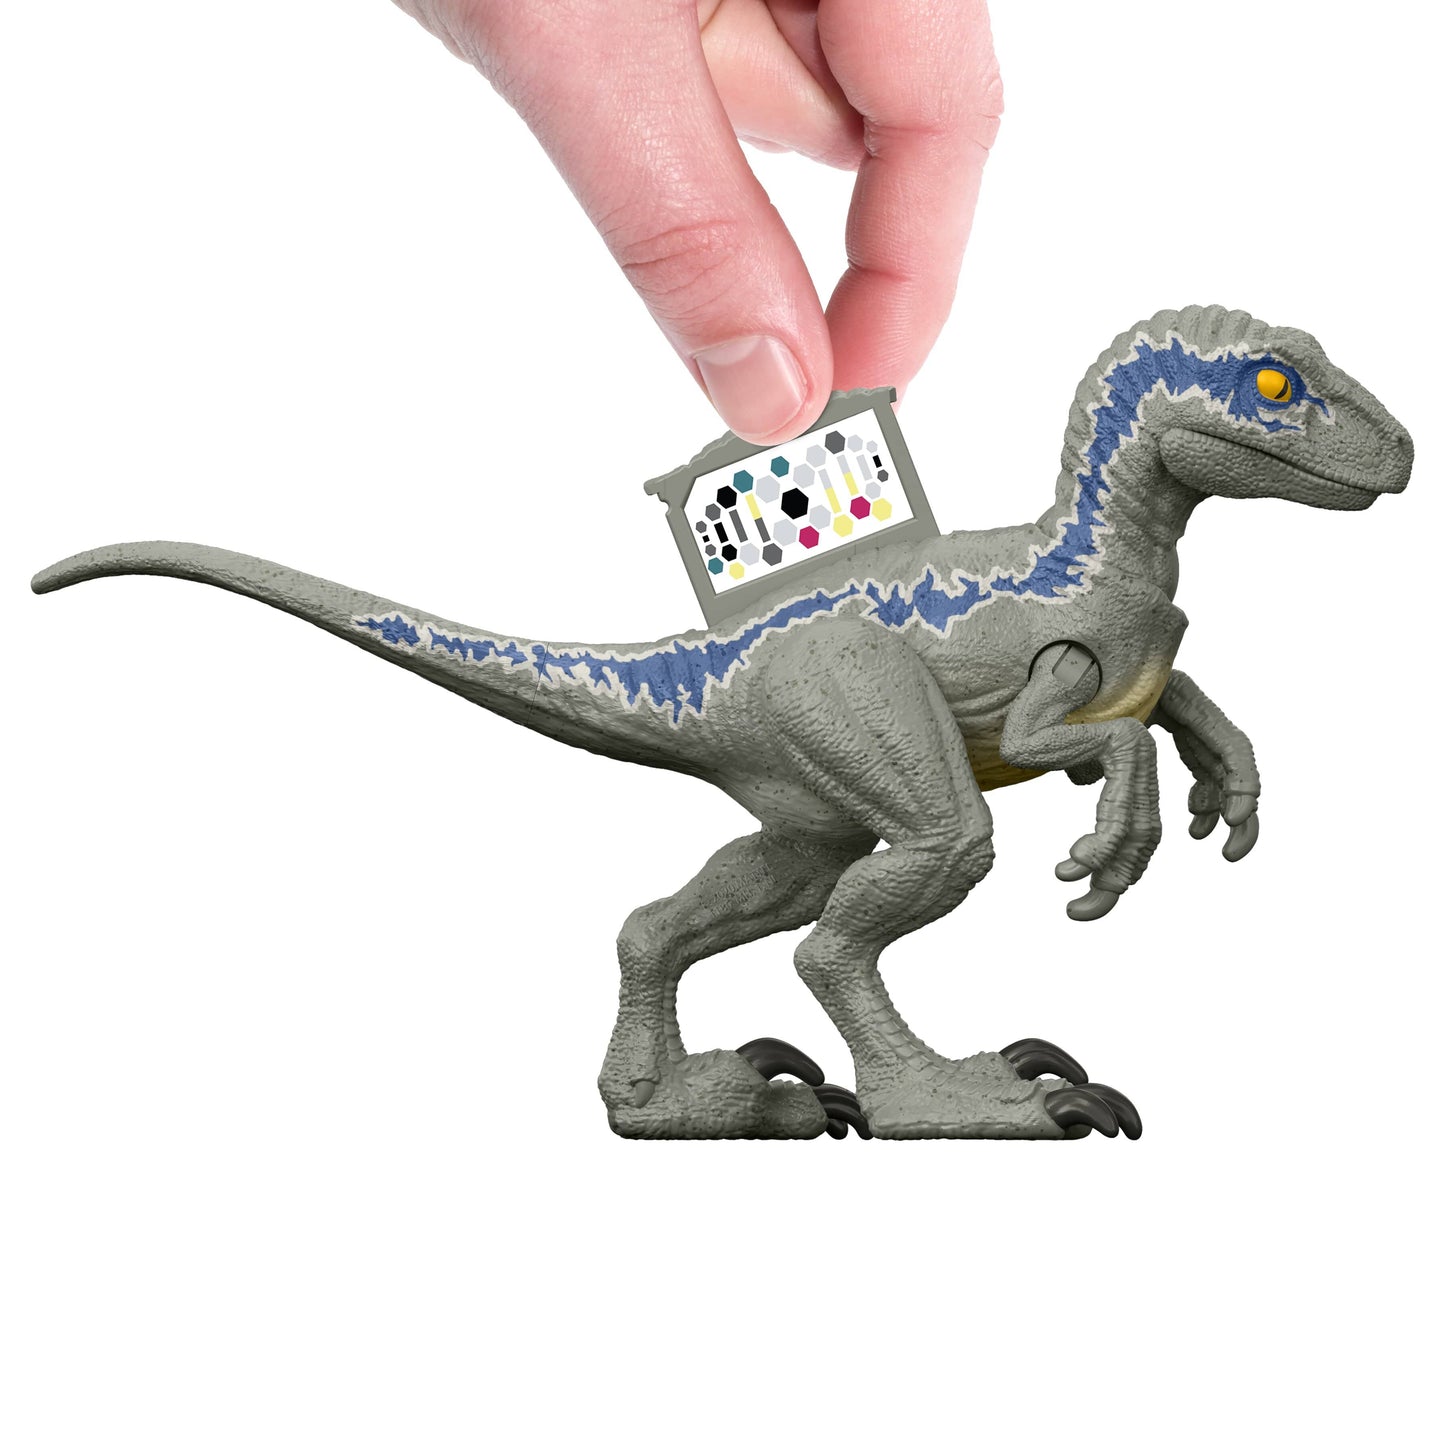 Owen and Velociraptor Beta - Jurassic World Dominion Action Figures